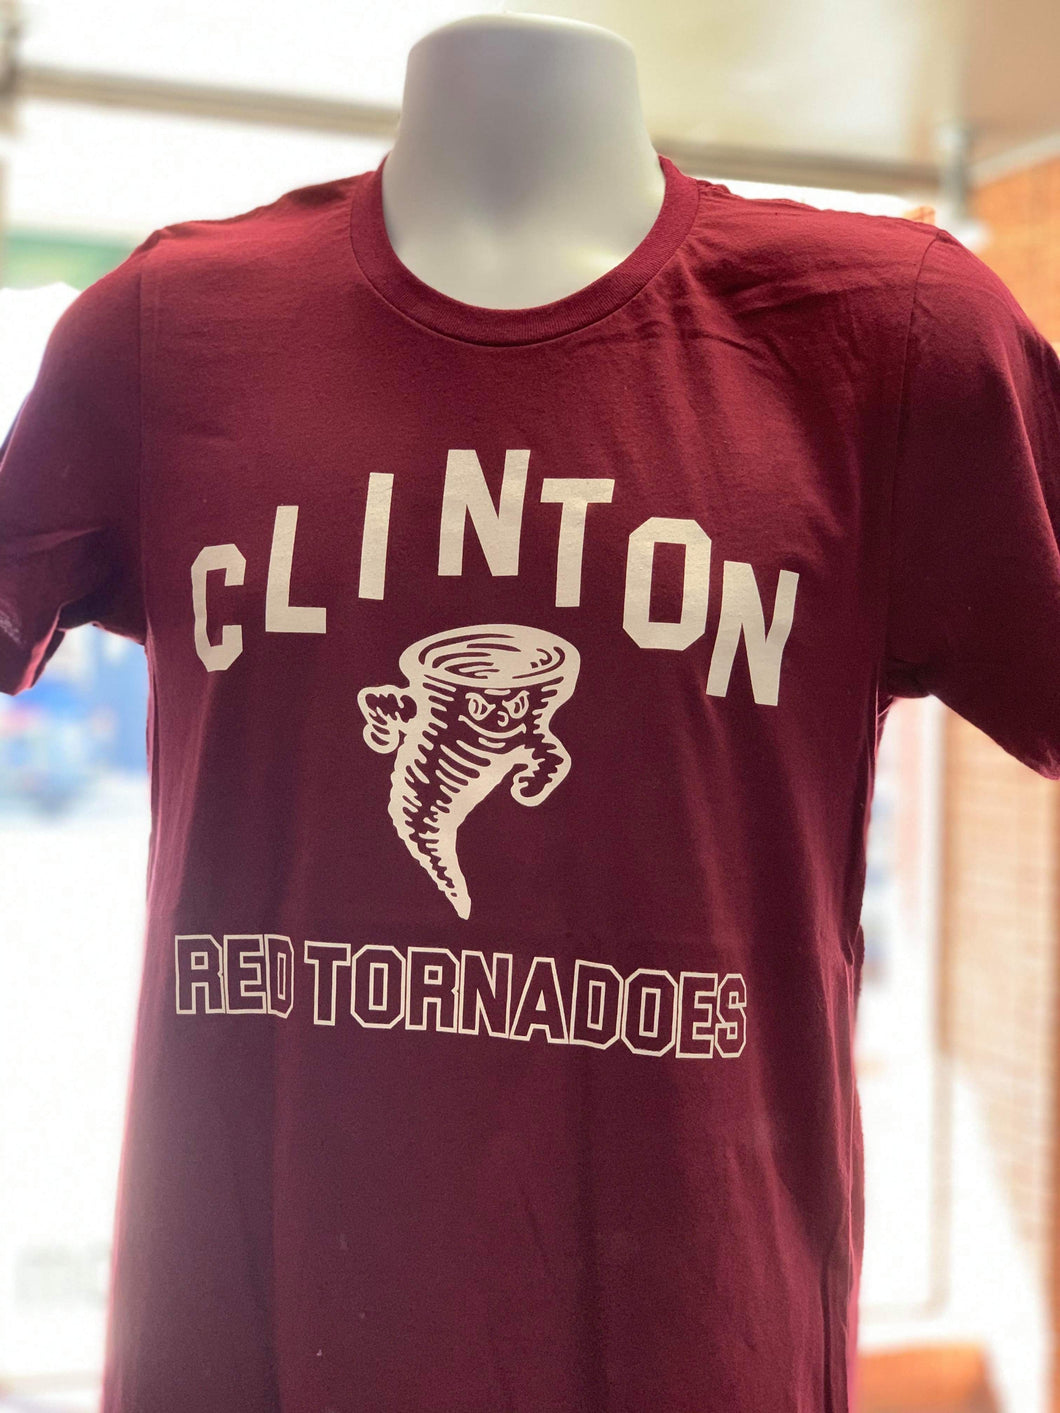 Clinton Red Tornados T-Shirt